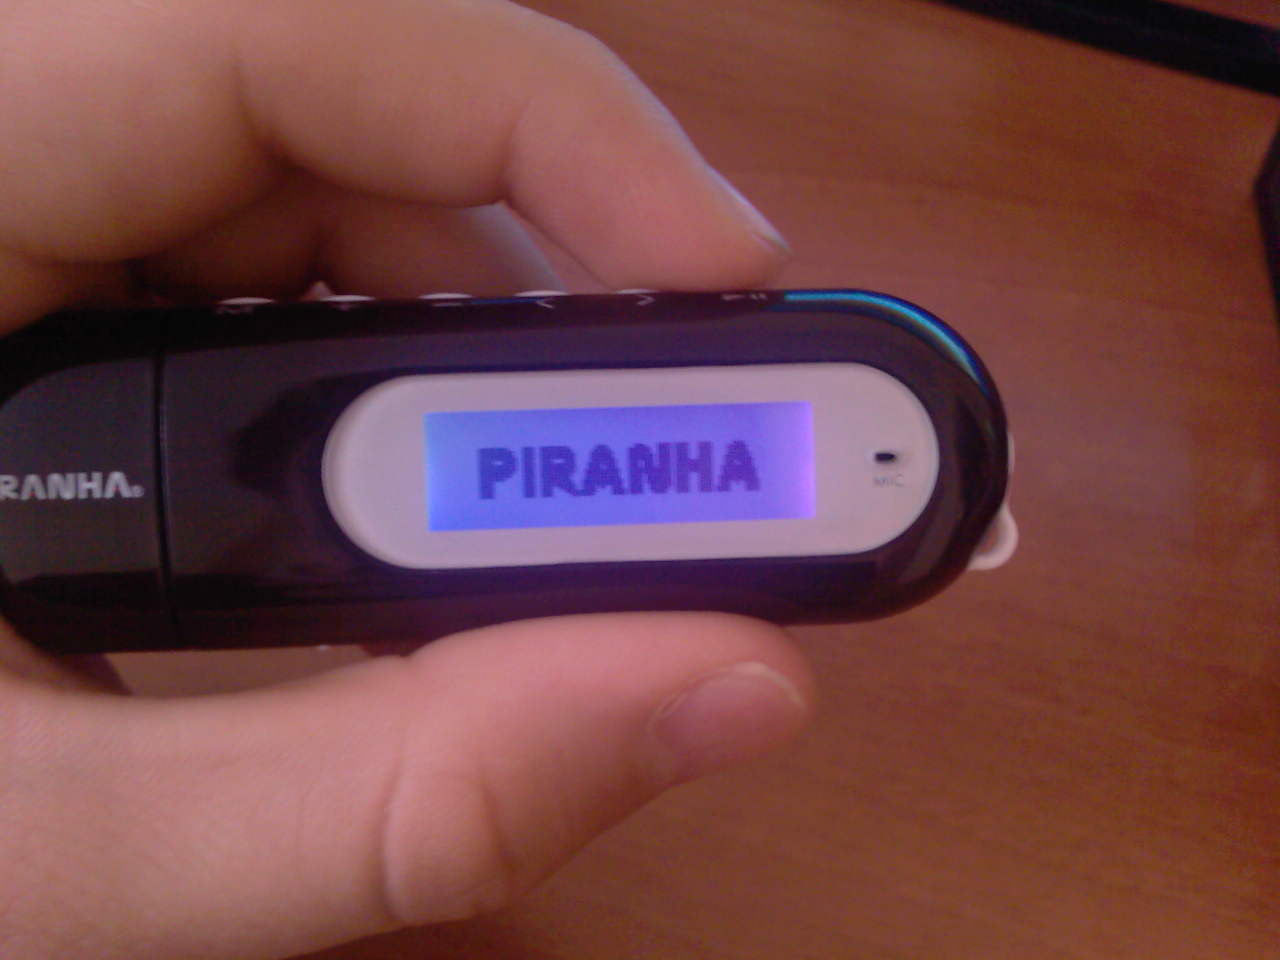  Piranha Buddu Ultra 4gb Fm Radyolu Mp3 Player Tanıtım...